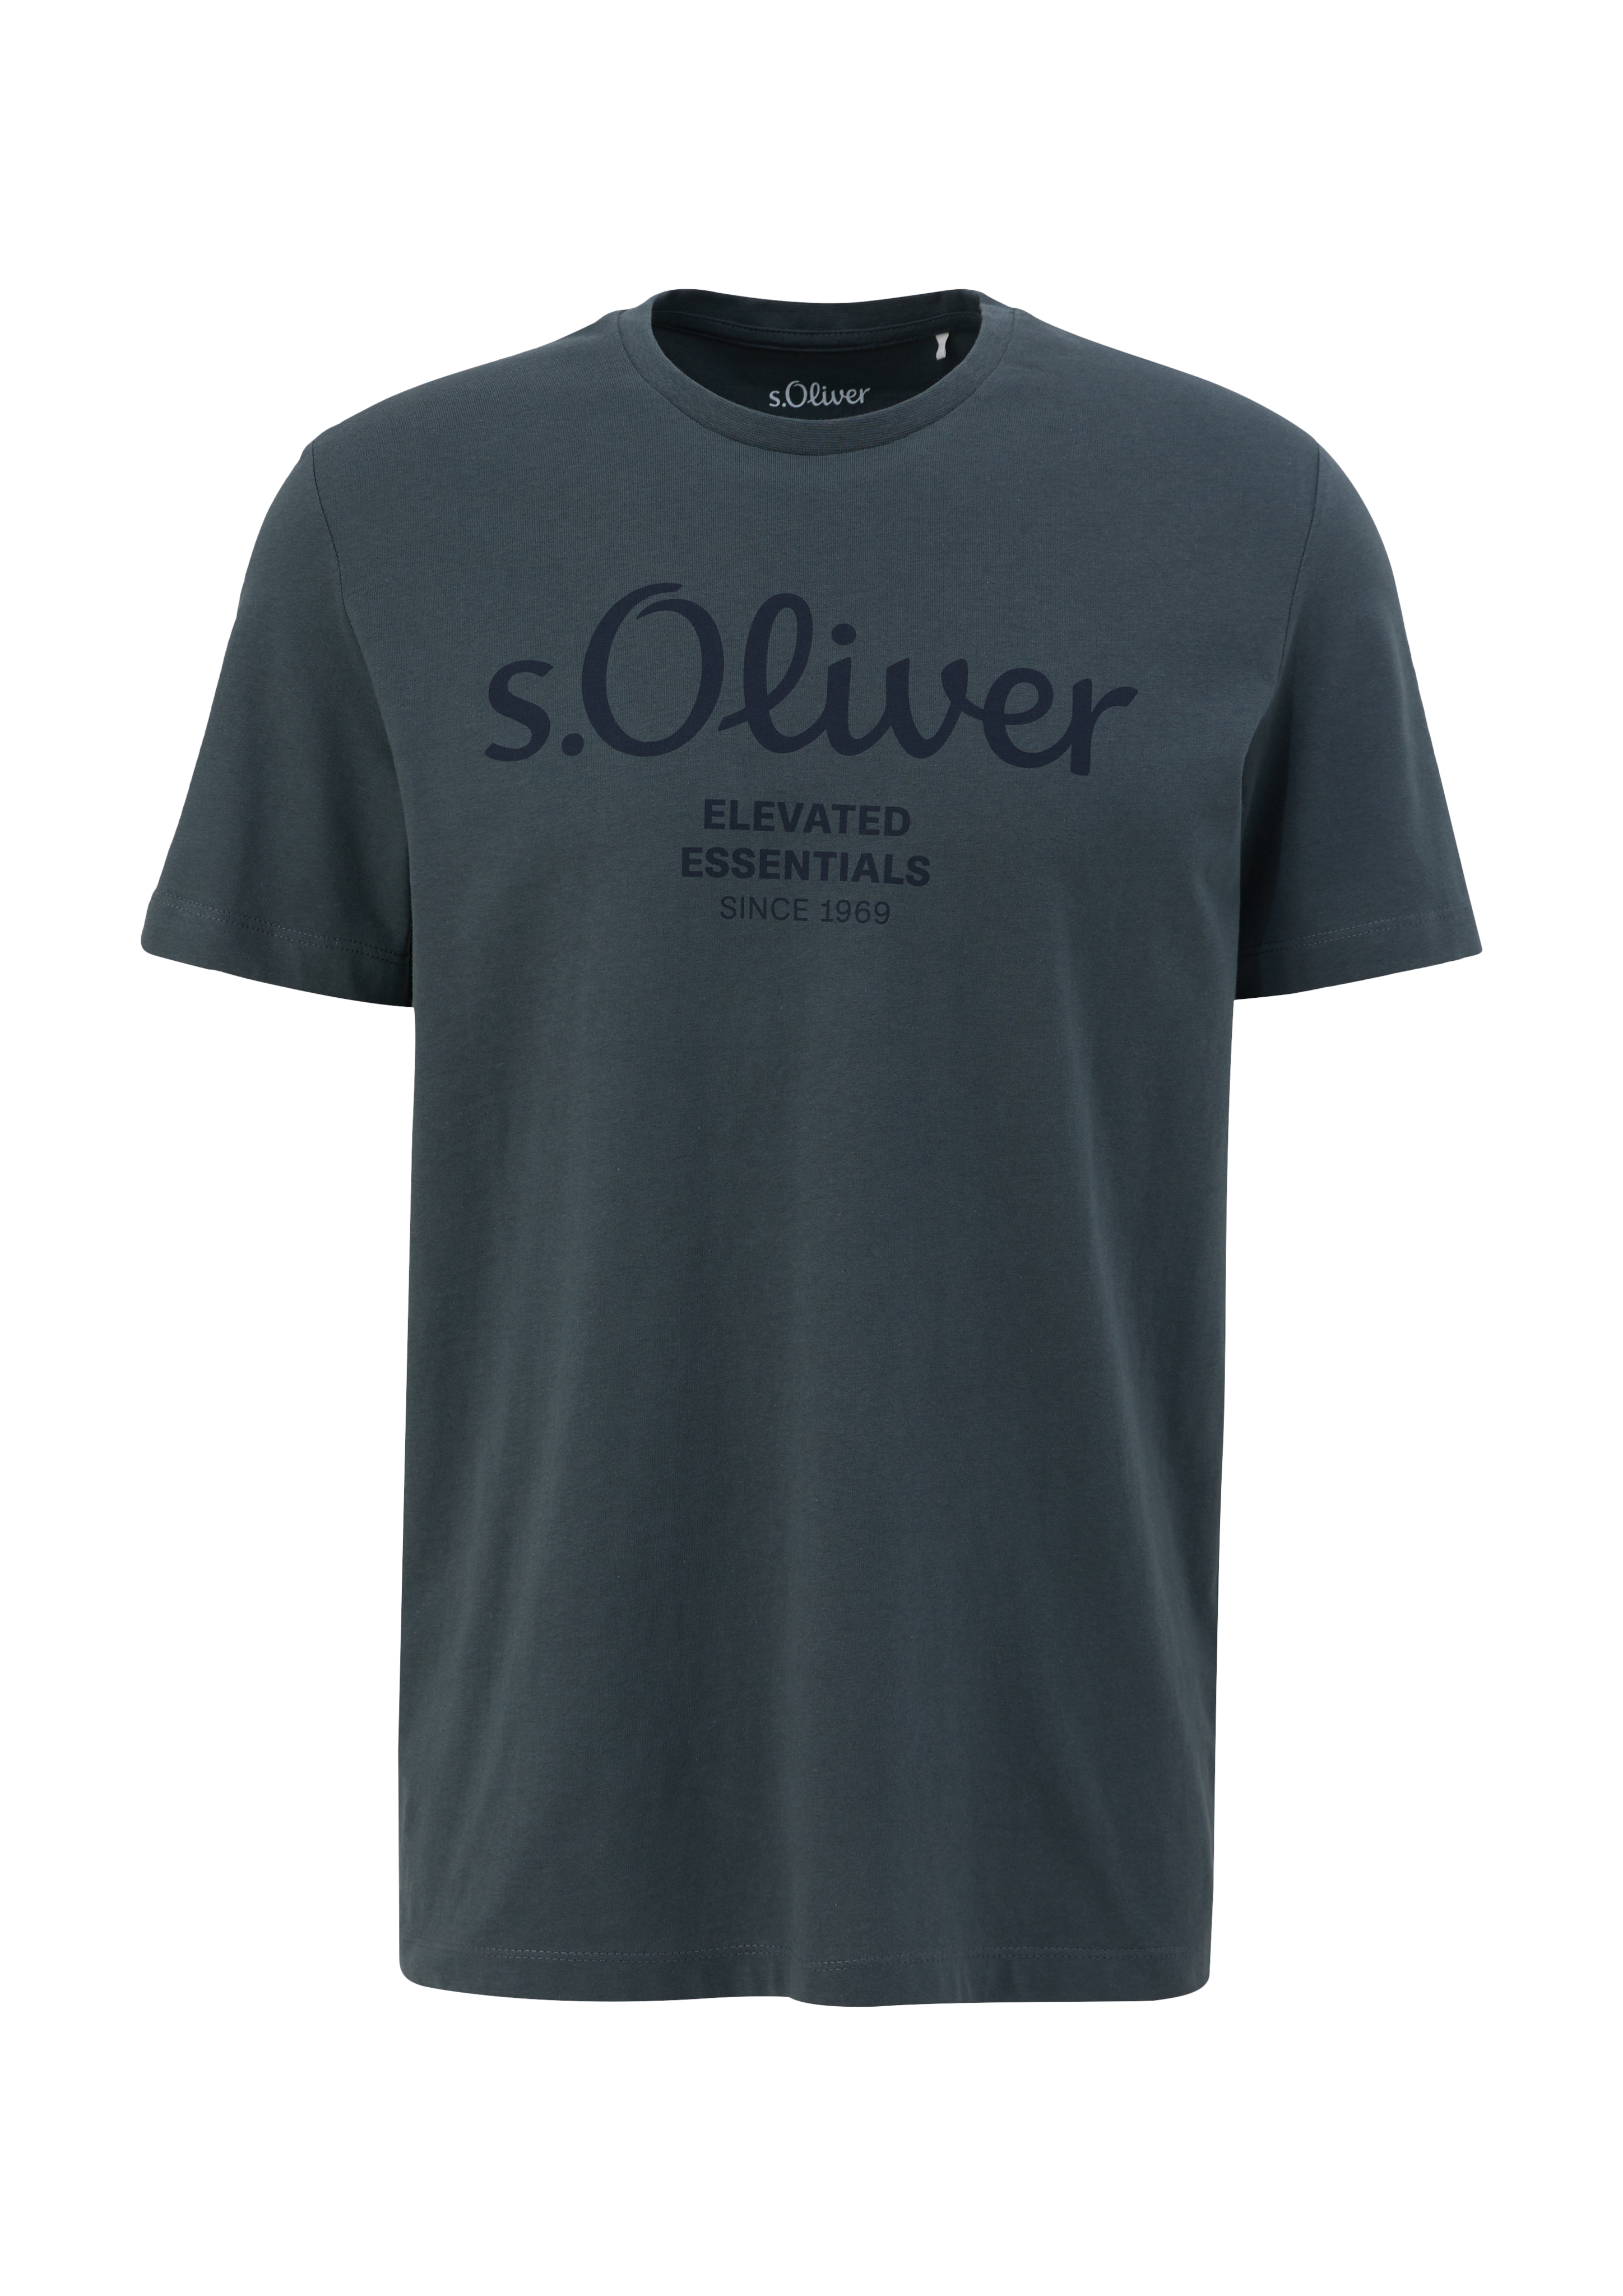 place T-Shirt XXL grey T-Shirt Oliver S.